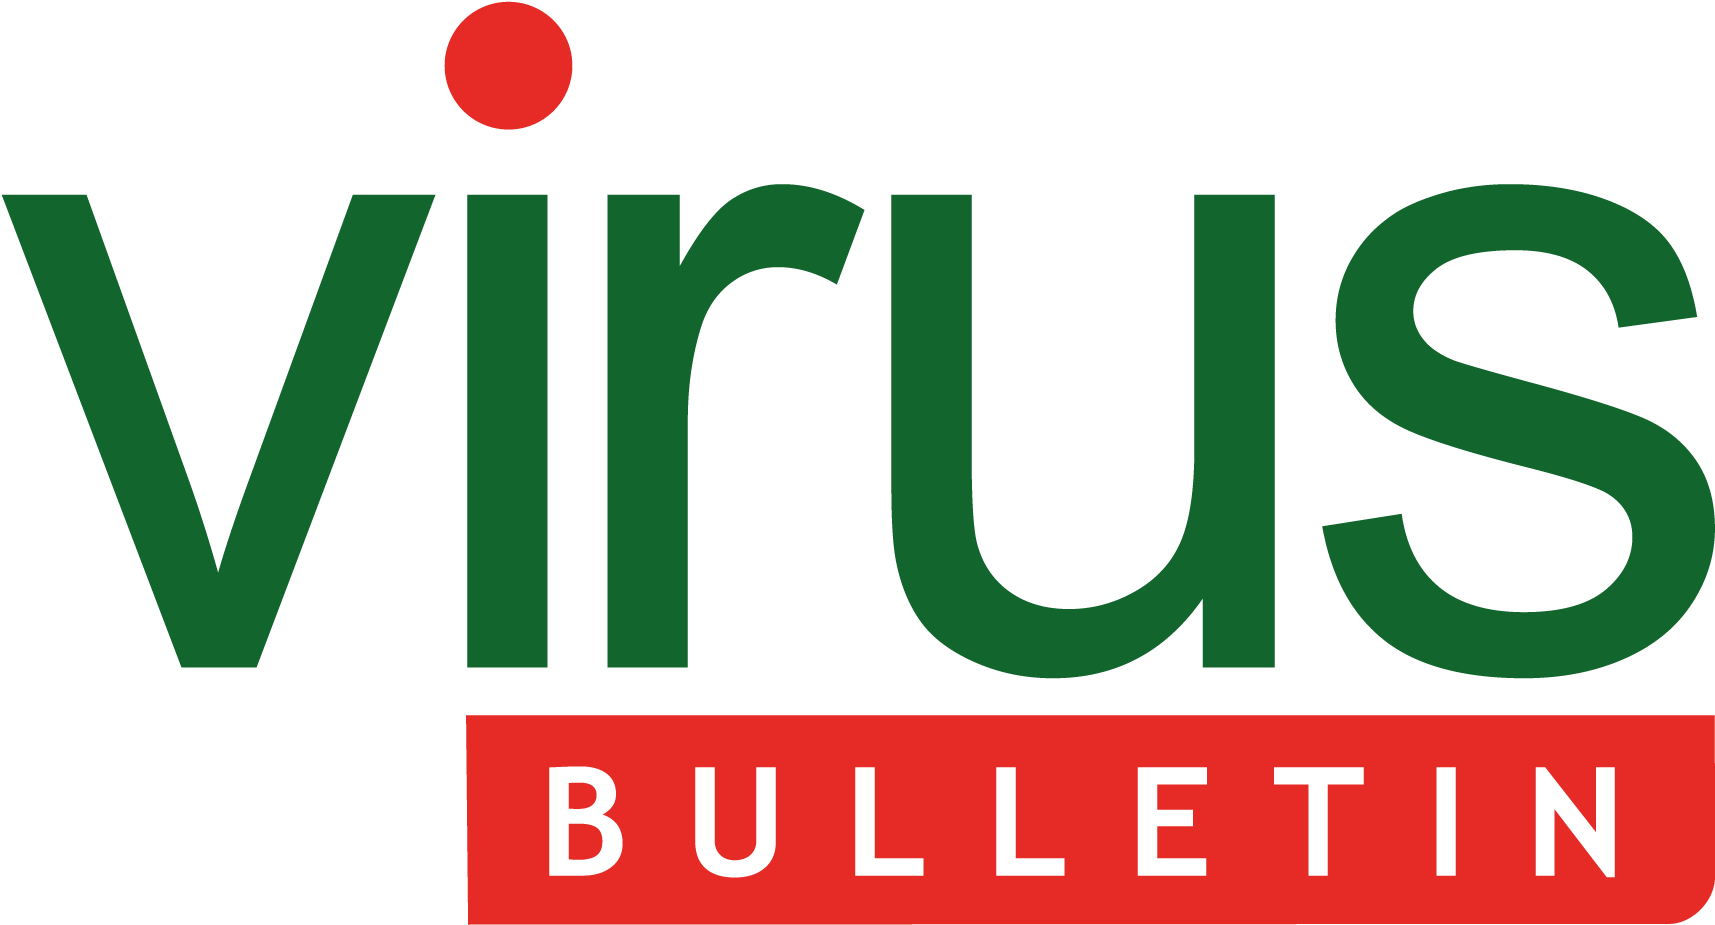 Virus Bulletin Logo In Png Format - Virus Bulletin Logo (1800x1050), Png Download